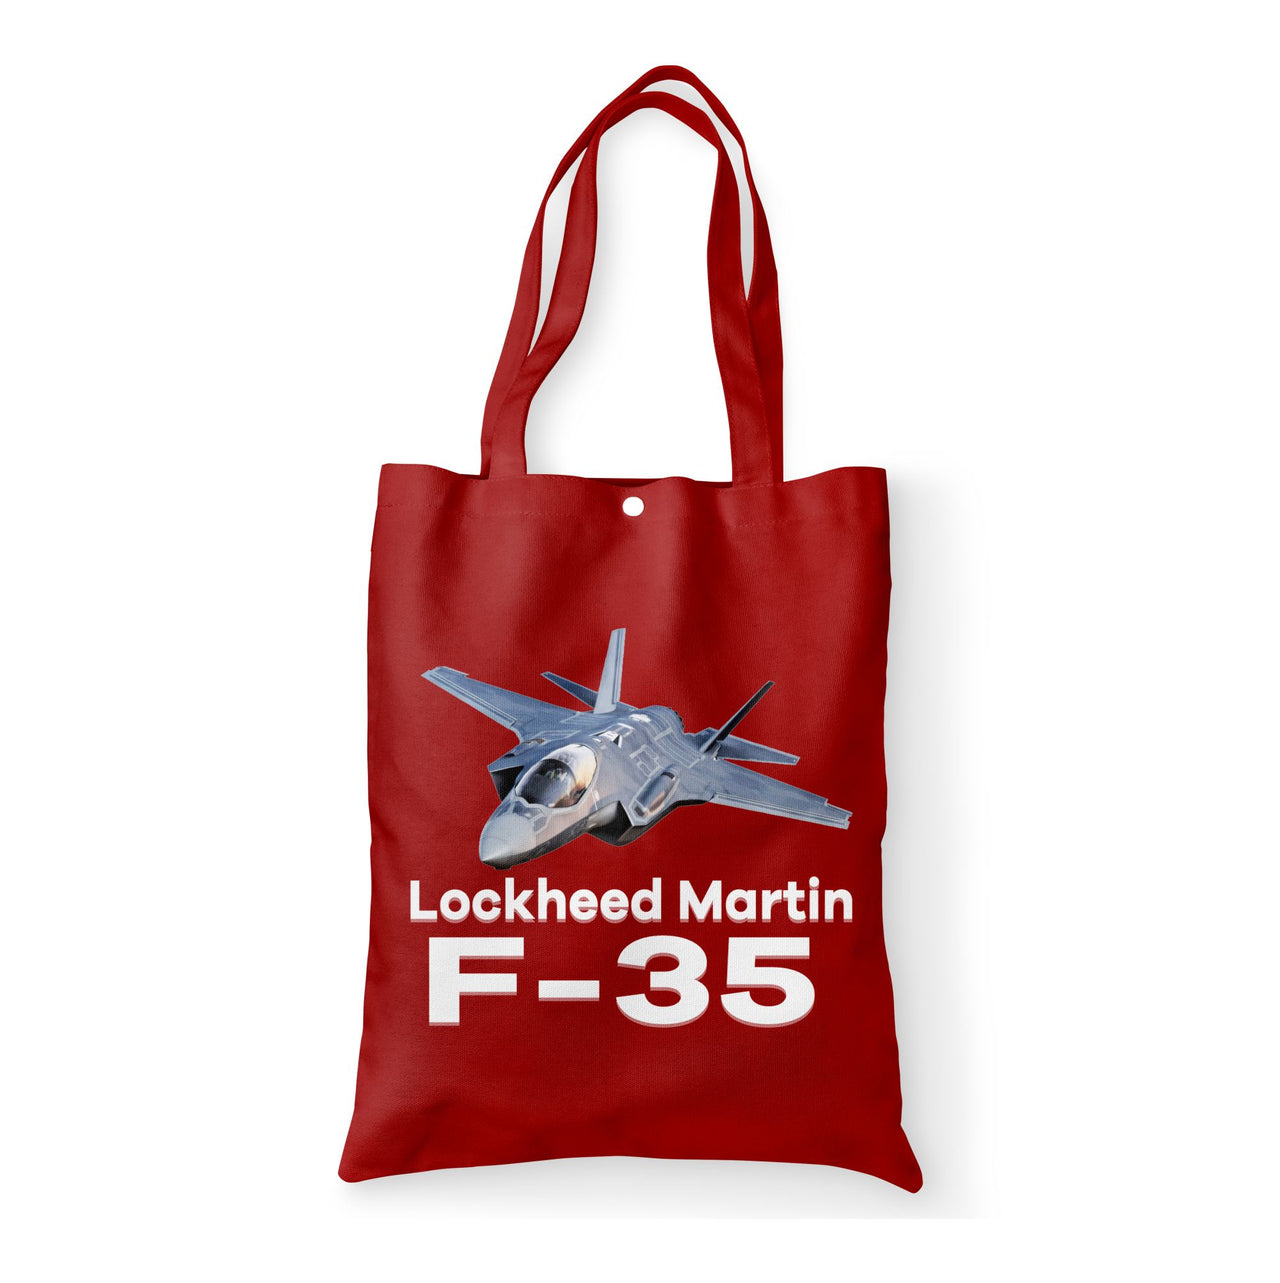 The Lockheed Martin F35 Designed Tote Bags